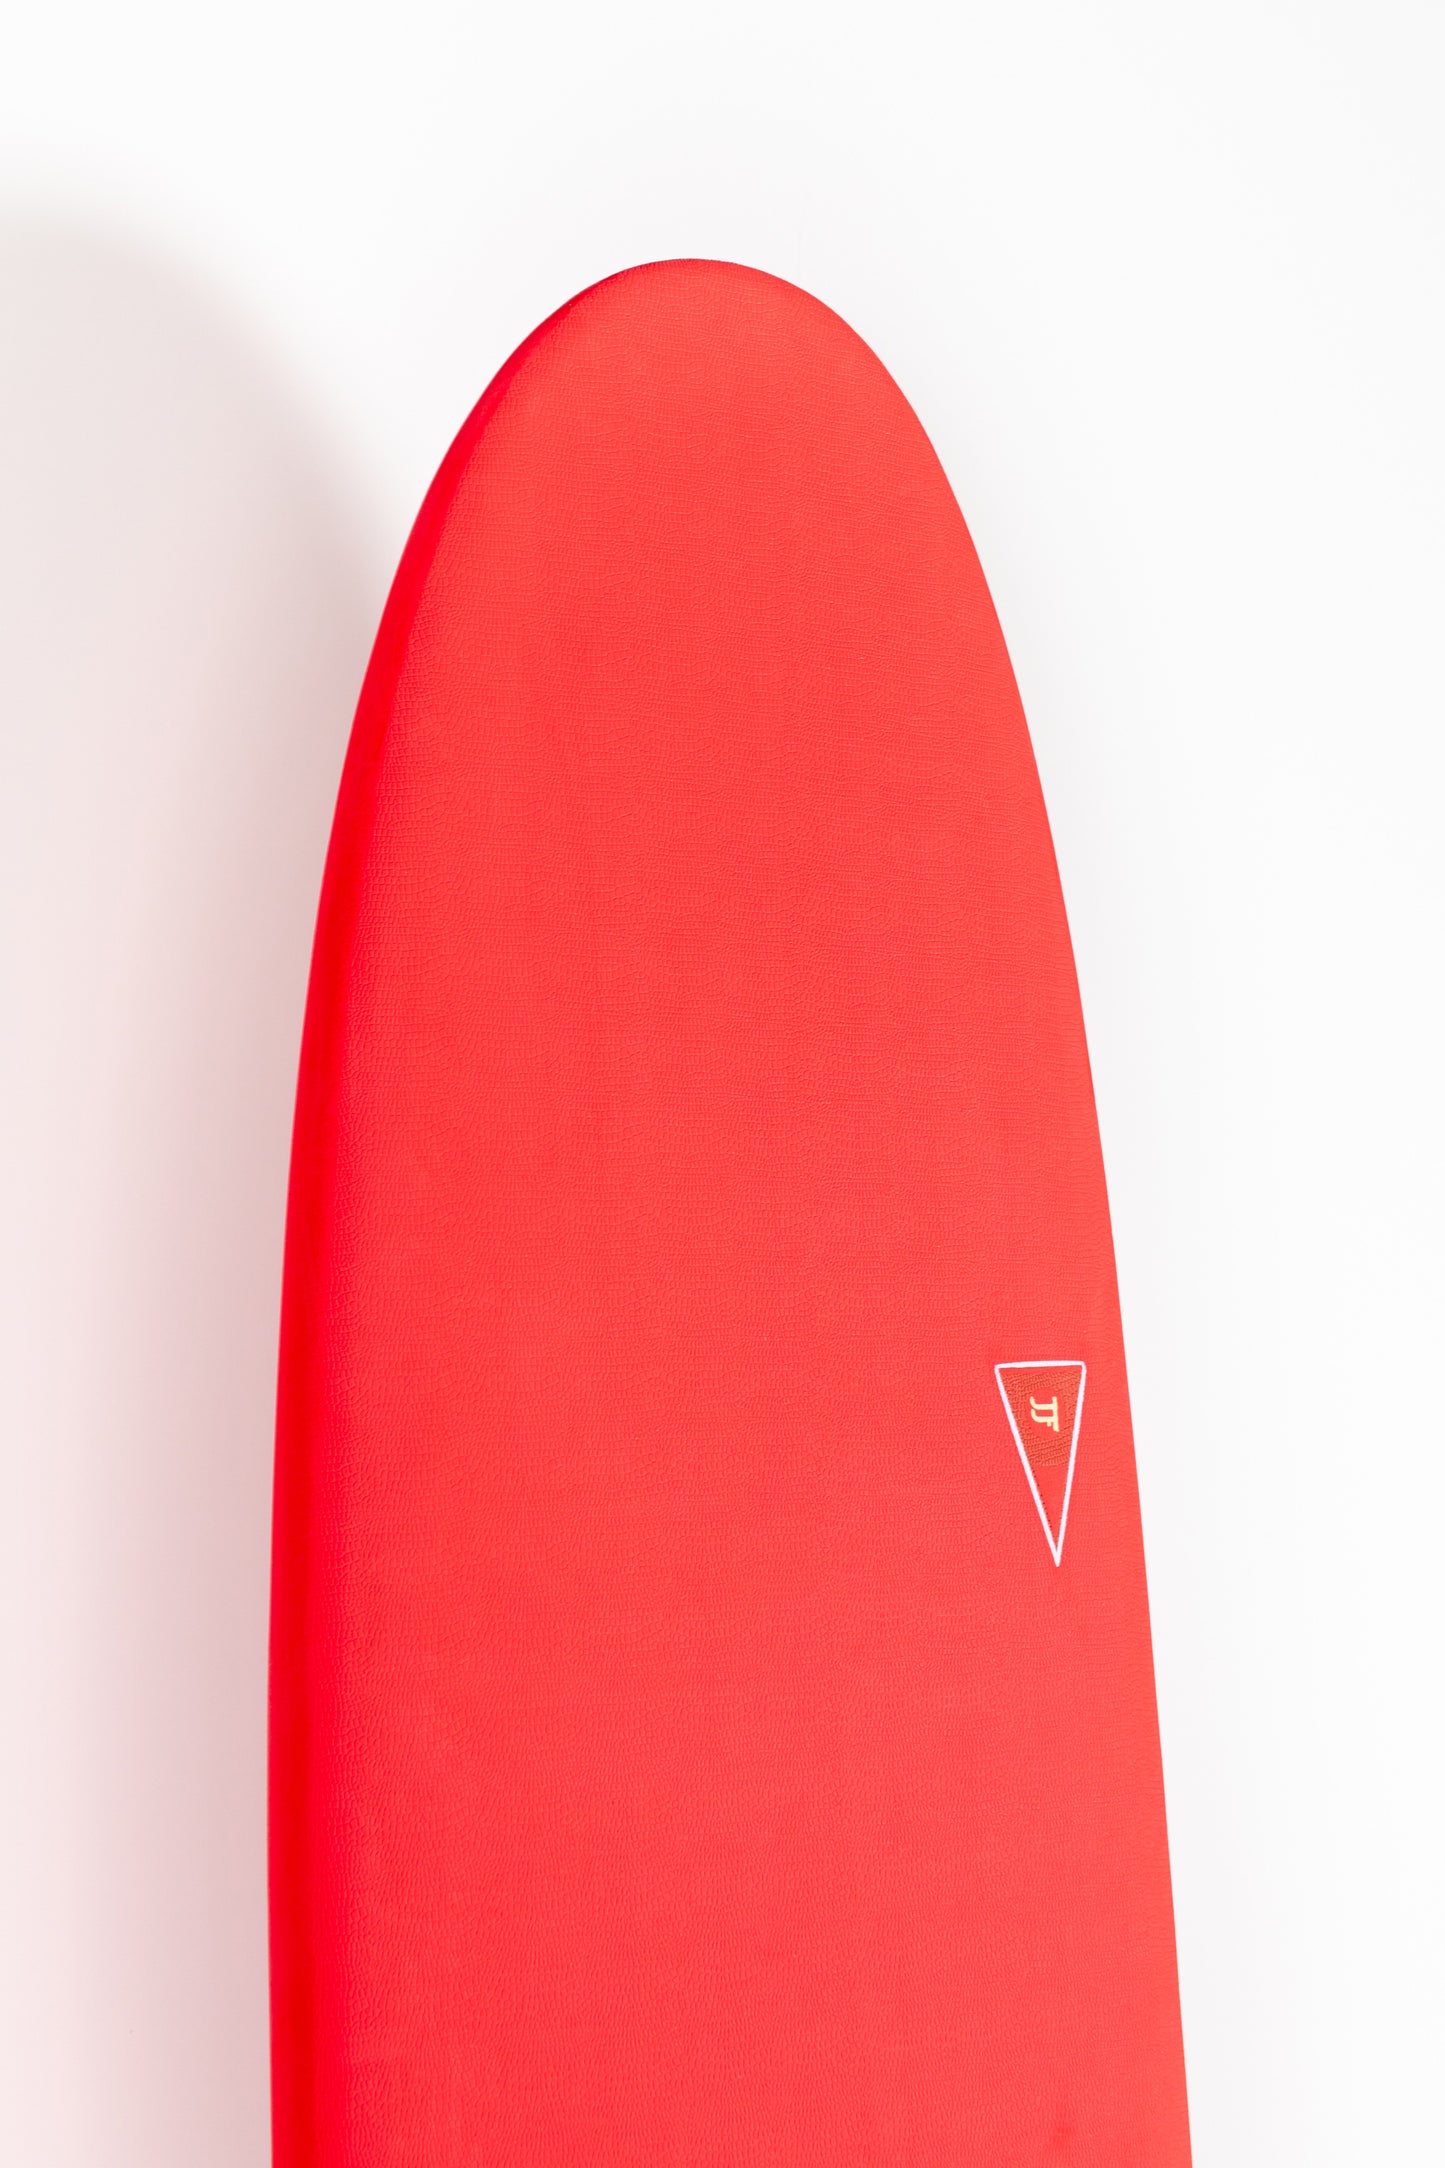 
                  
                    Pukas Surf Shop - JJF SURFBOARD - THE LOG 9.0 RED
                  
                